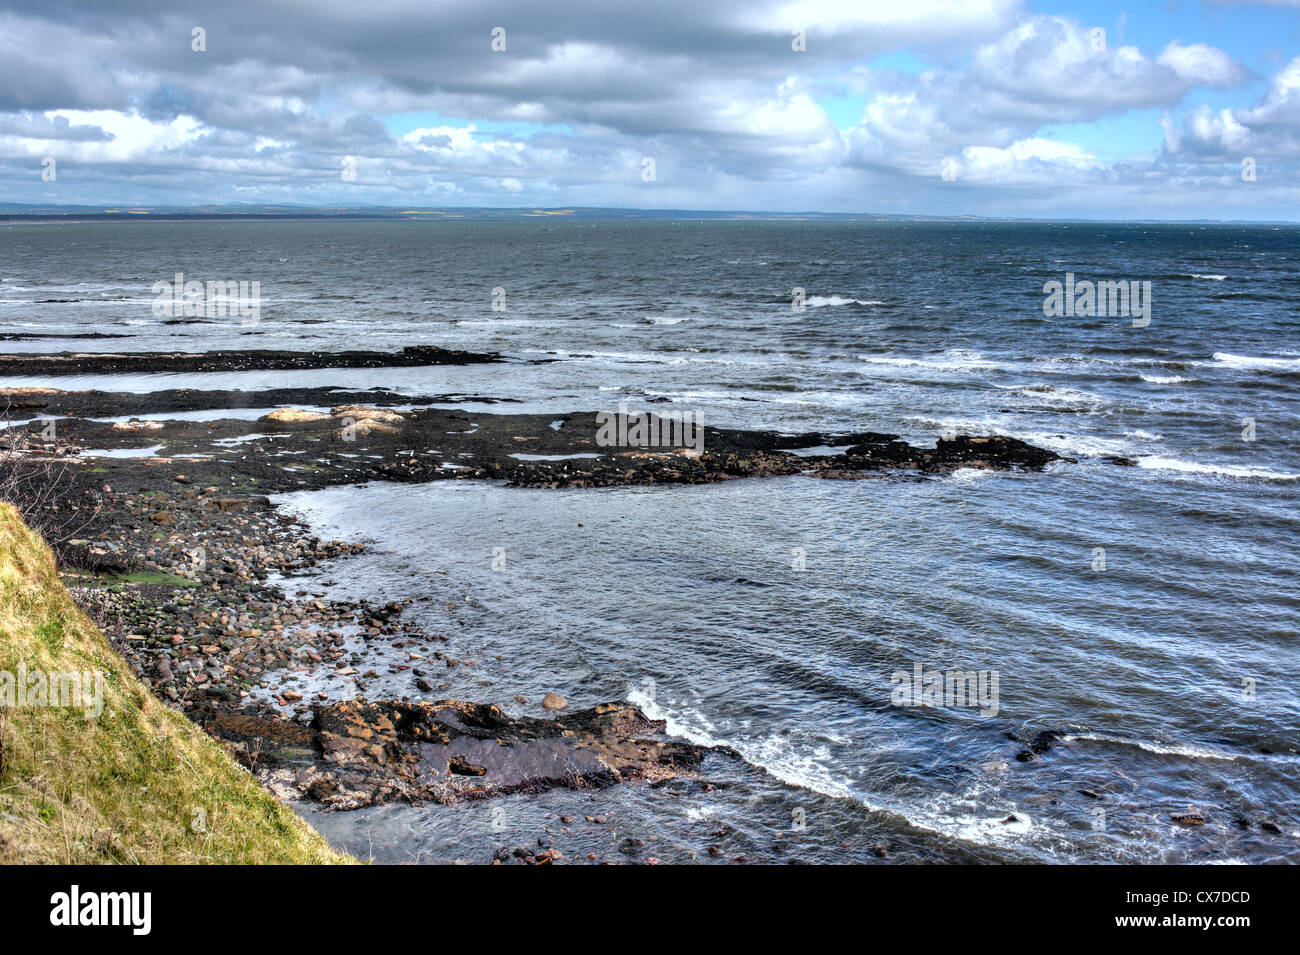 La côte de la mer, St Andrews, Fife, Scotland, UK Banque D'Images